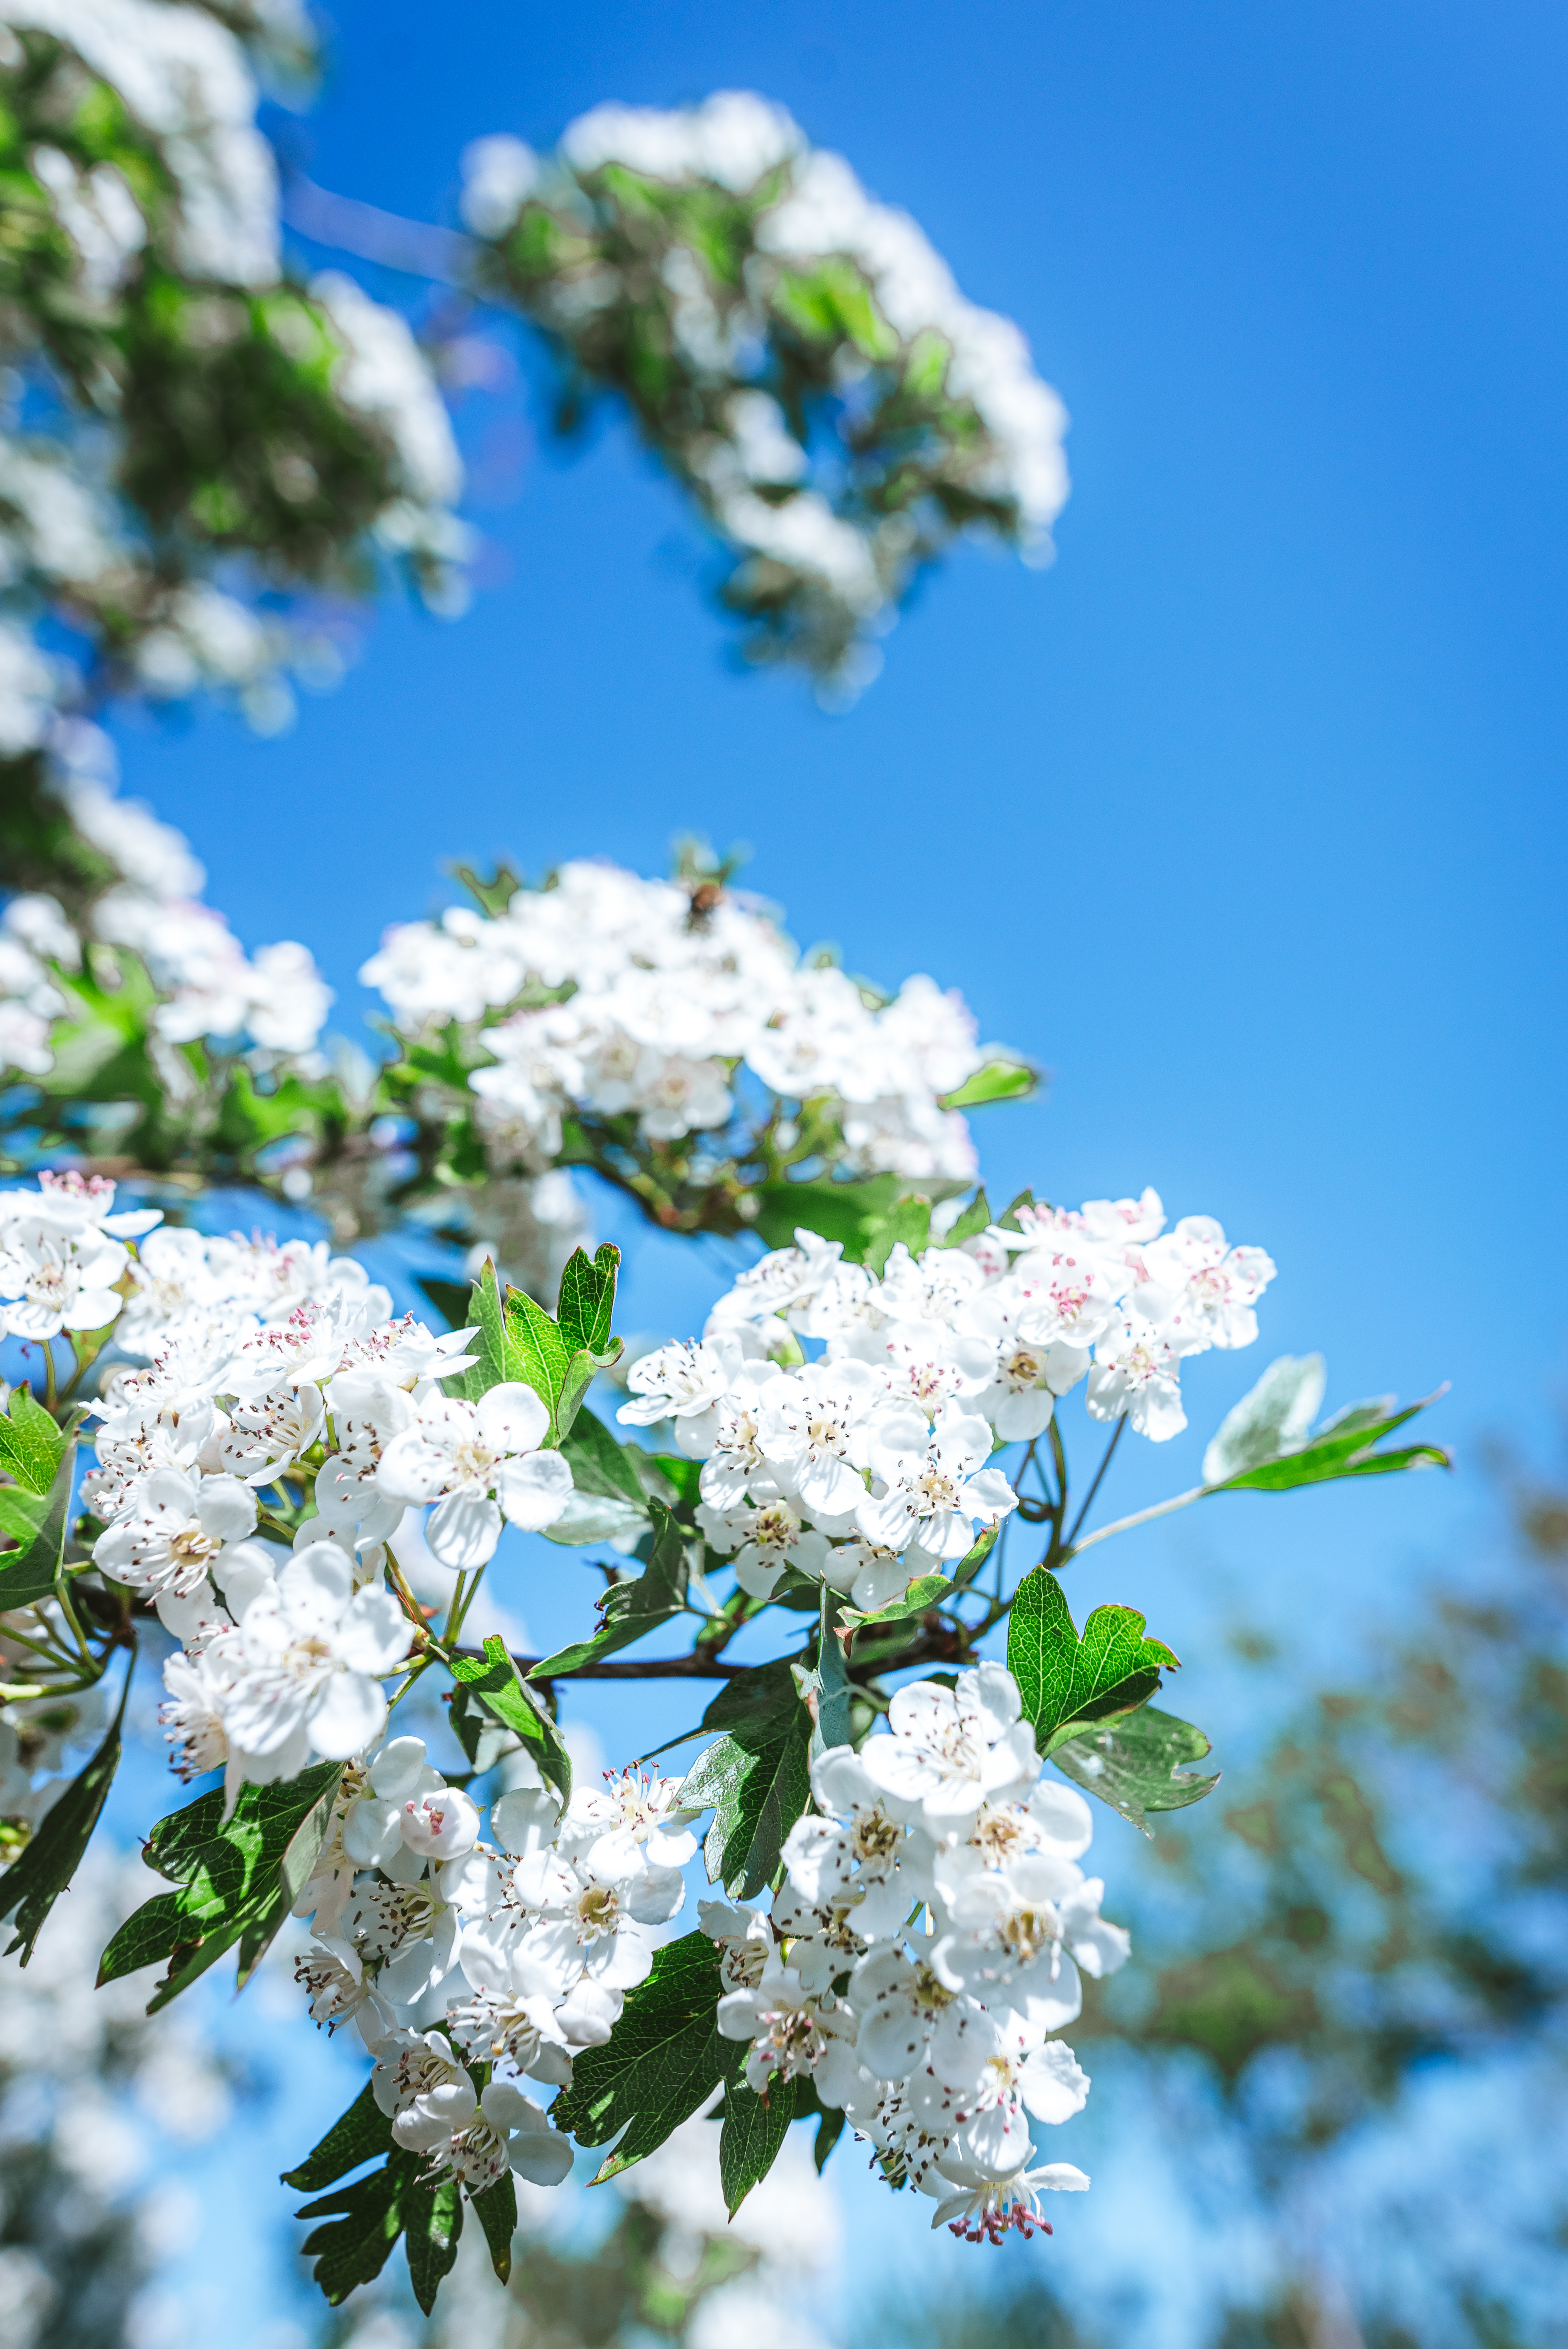 Spring Flowers Against Blue Sky Free Stock Photo | picjumbo